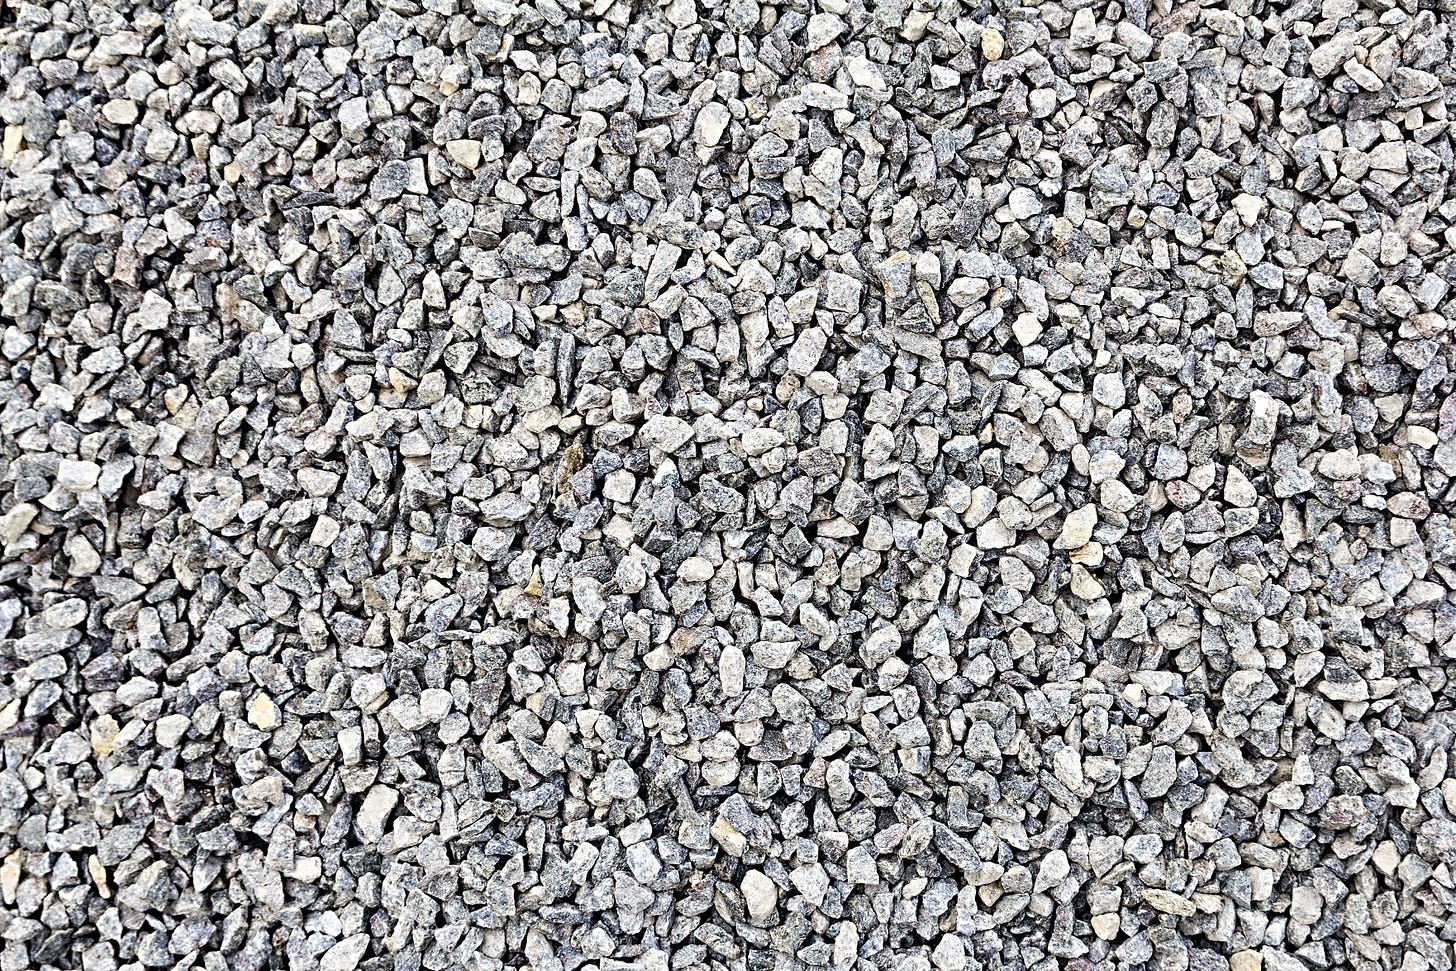 A flat patch of semi-decorative gravel